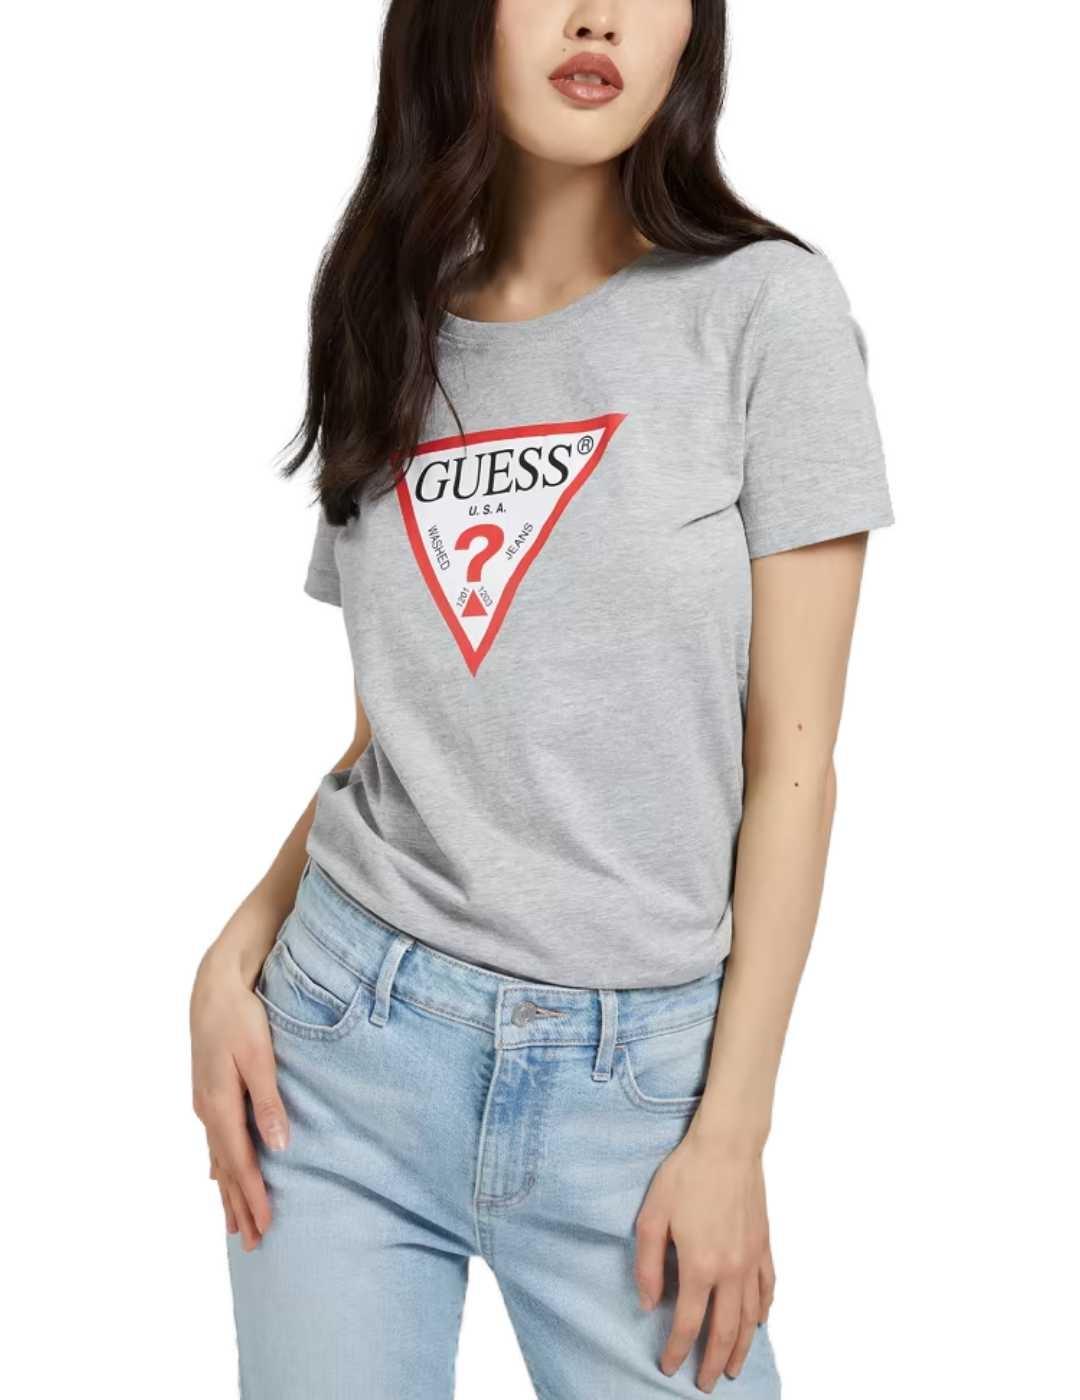 Camiseta Guess original basica gris para mujer